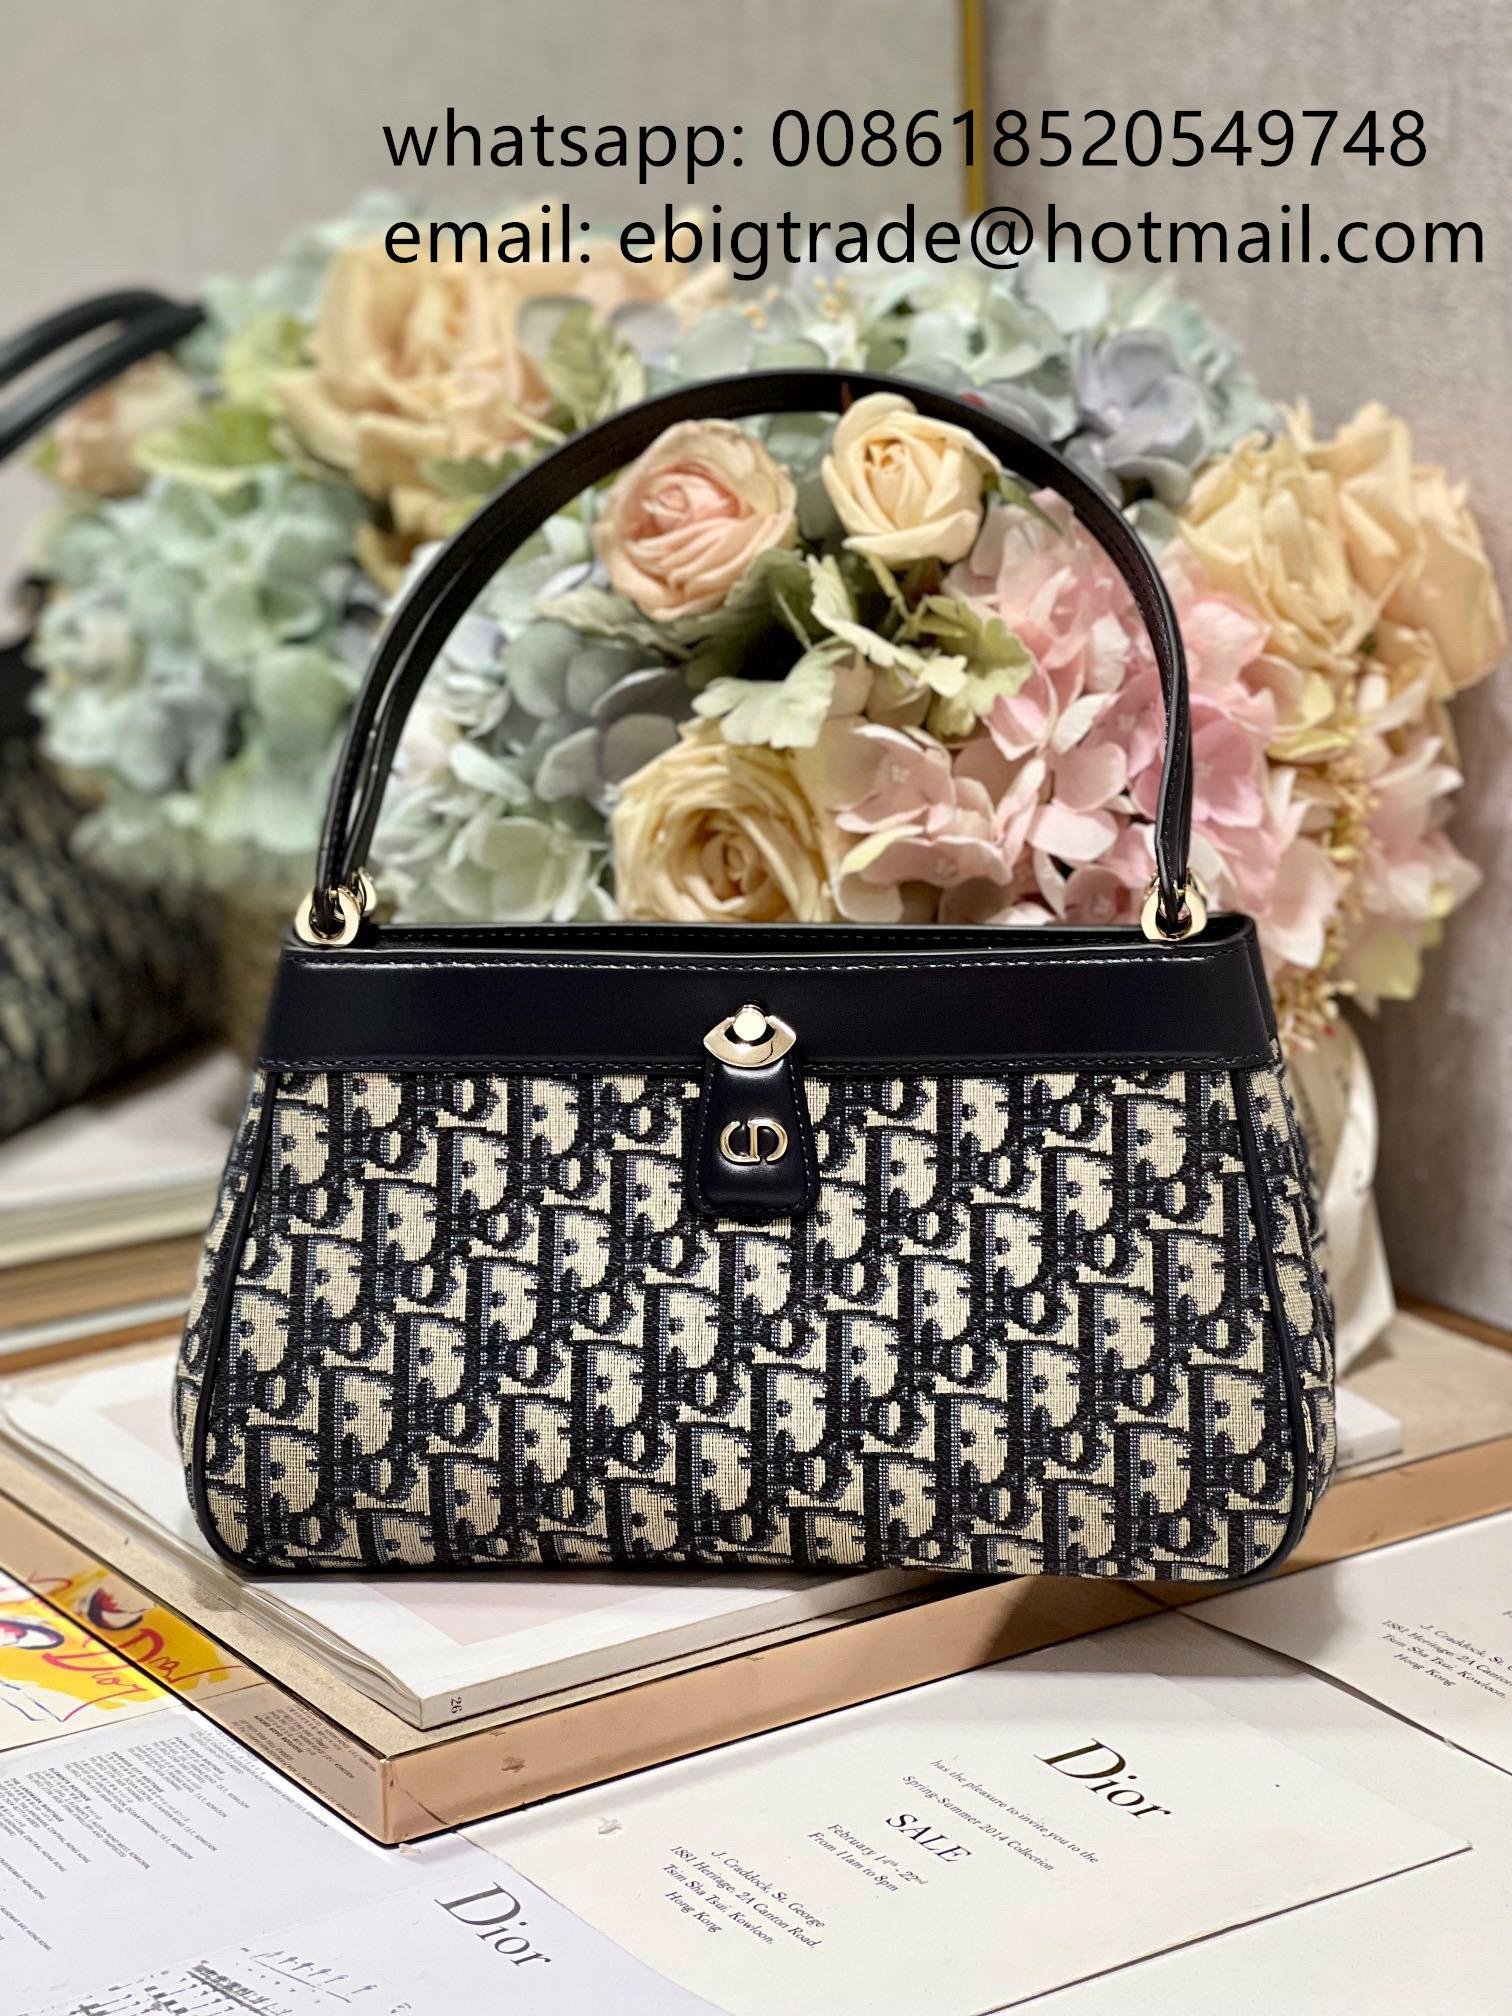 Lady      Medium      Key Bag Small      Key Bag discount      Bag online Outlet 3